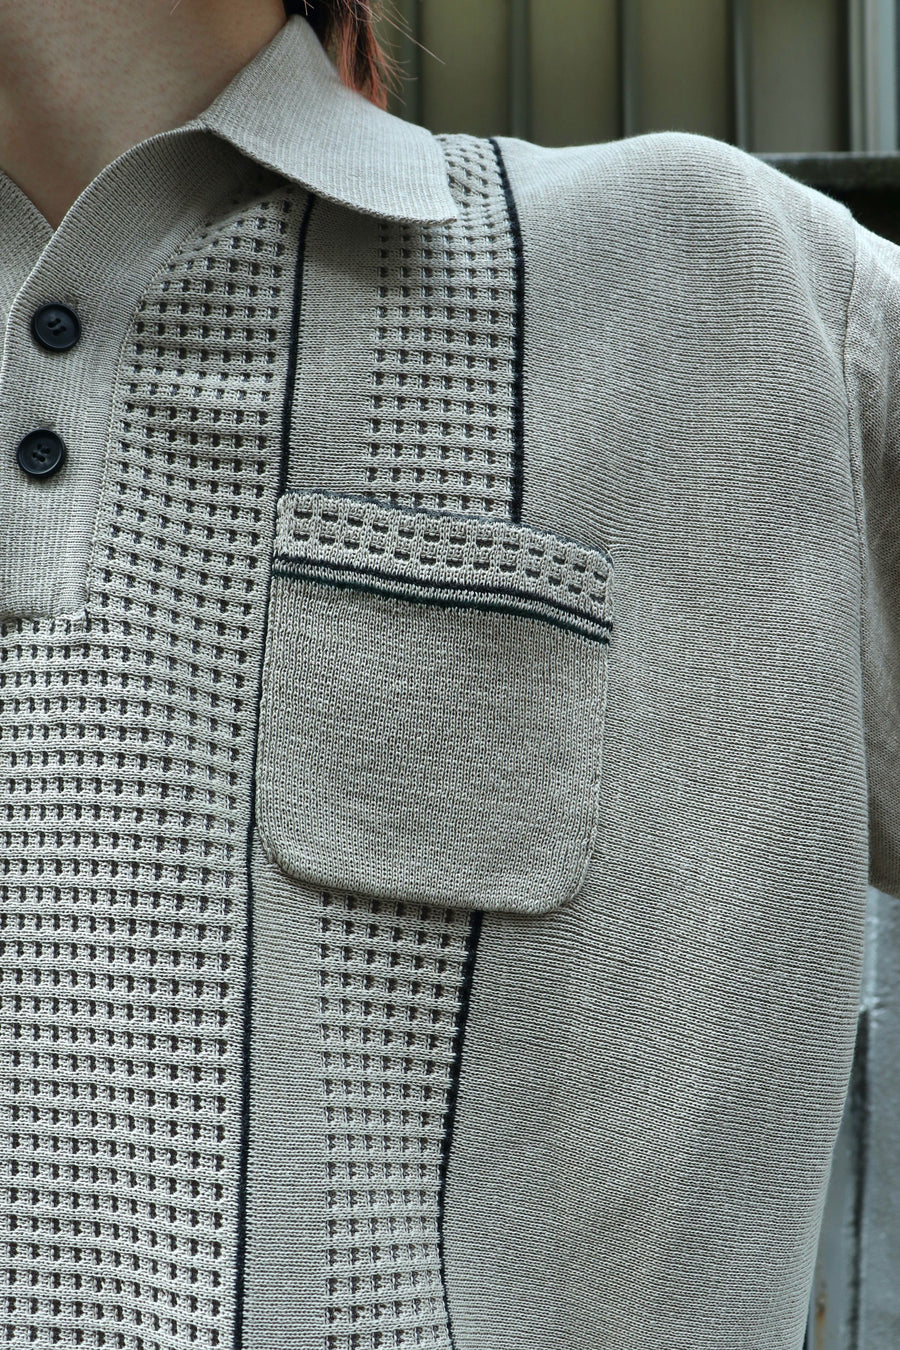 elephant TRIBAL fabrics  Grandfather knit polo(SANDAY BEACH)